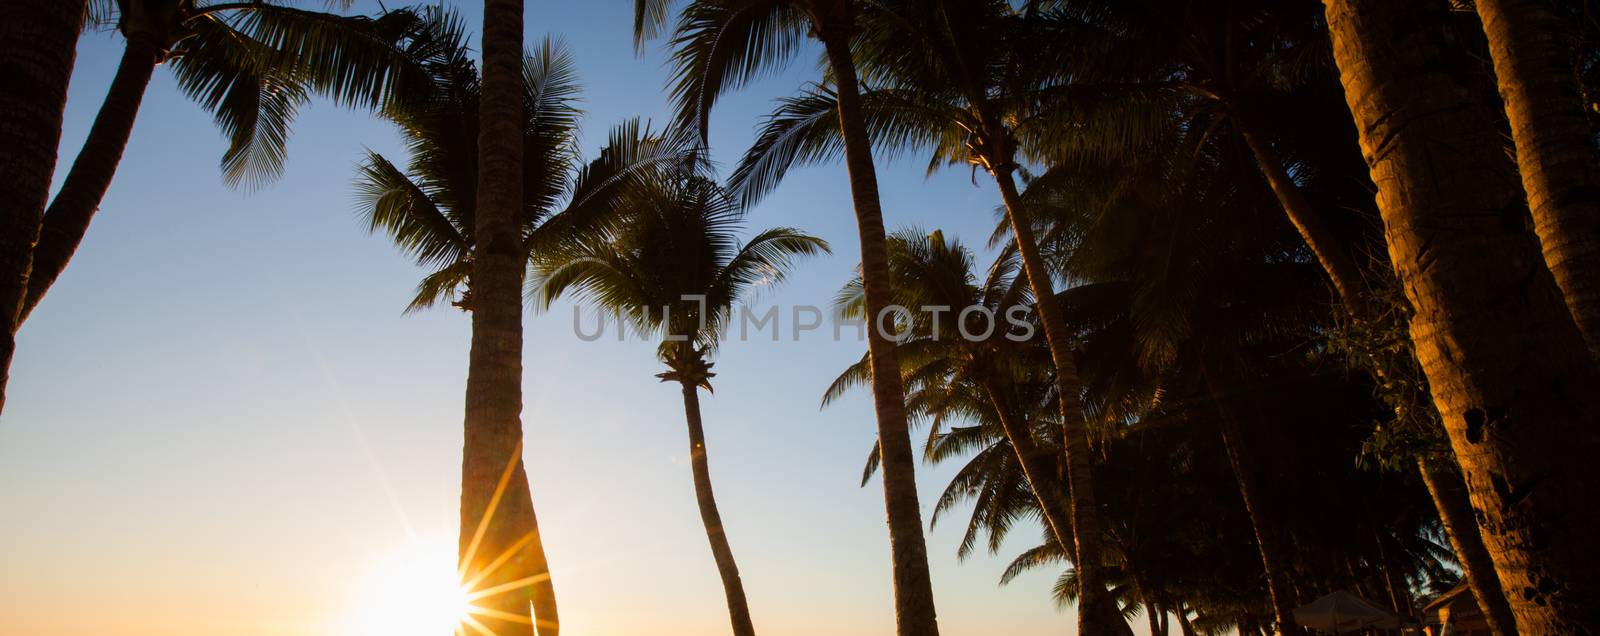 Sun shining through palm trees by Yellowj